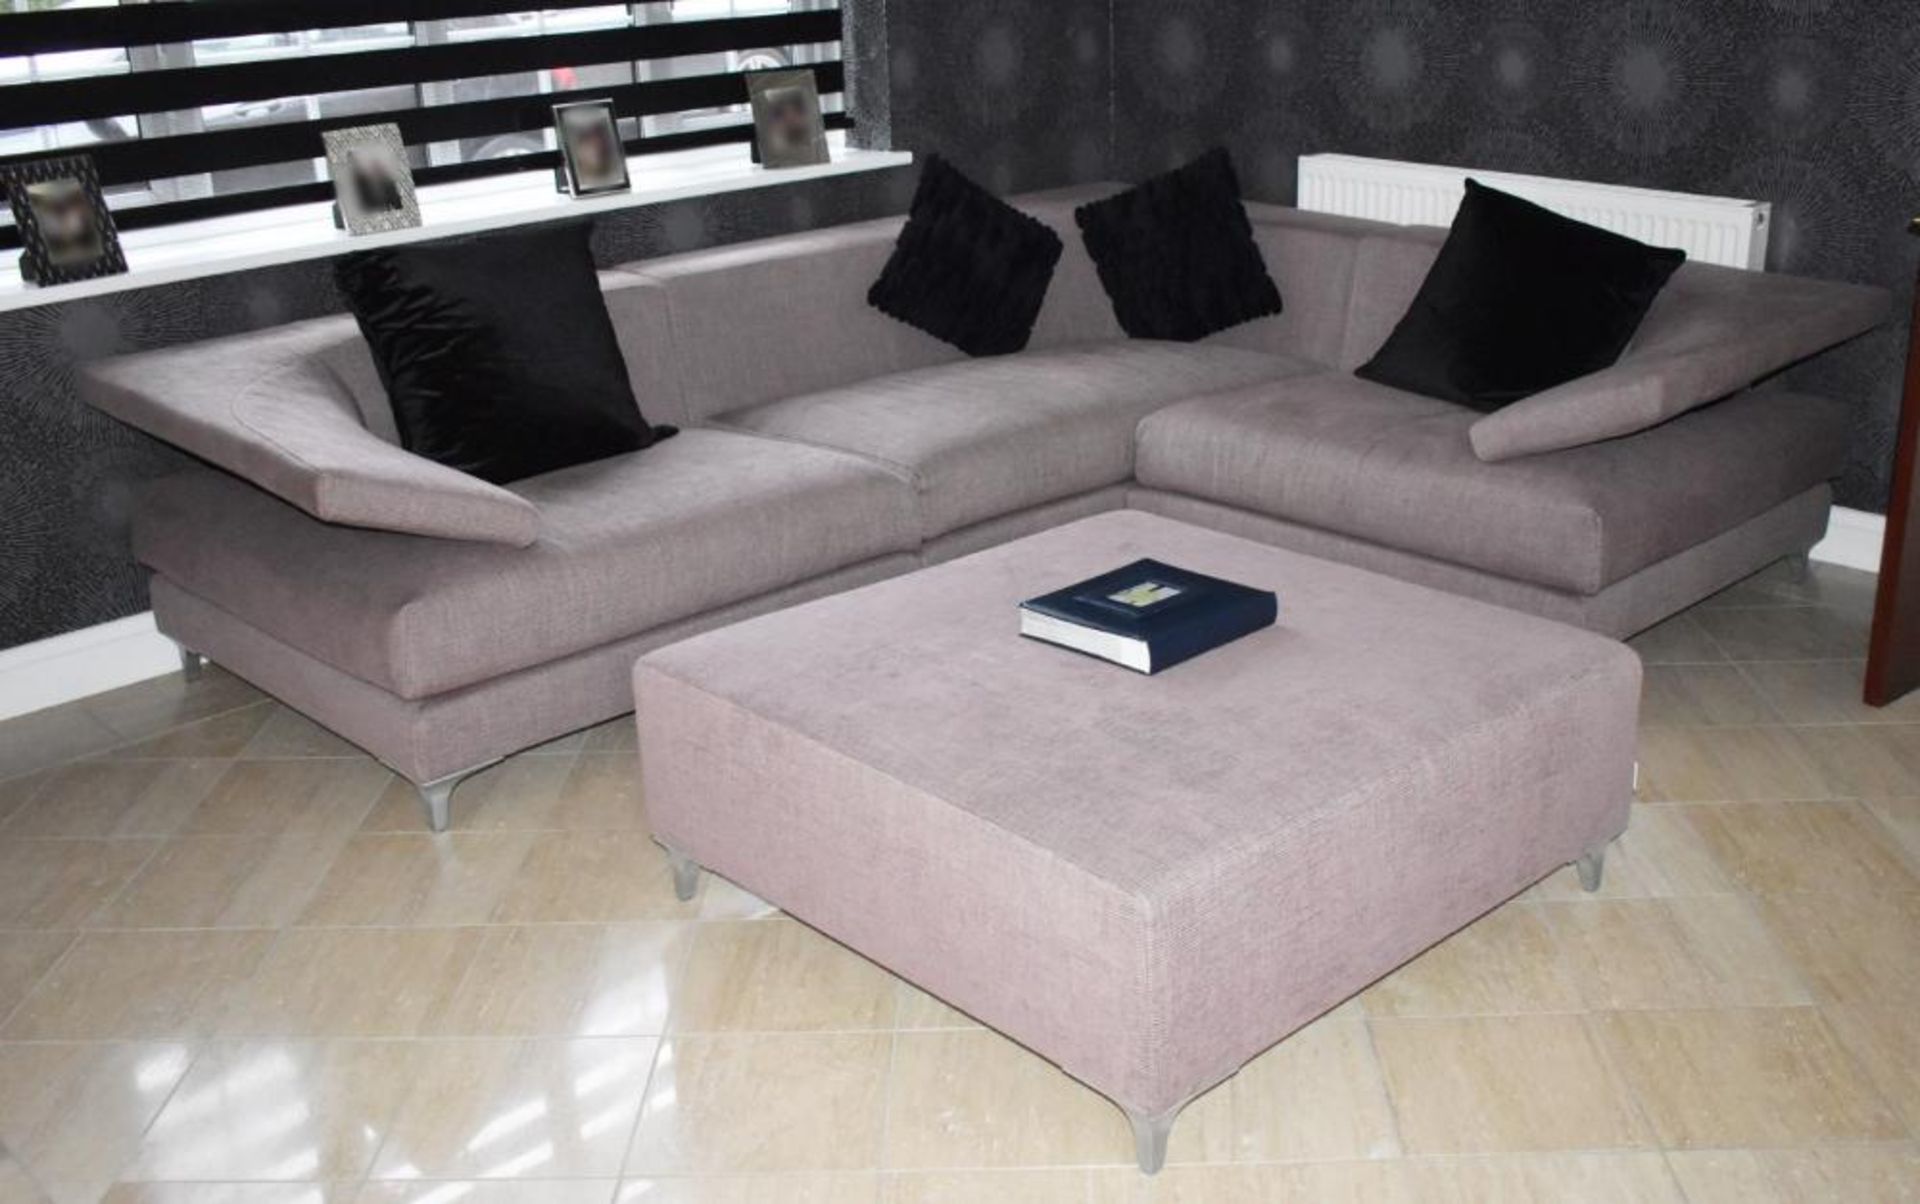 1 x SWAN Italia Corner Sofa and Ottoman finished in Light Purple - CL469 - Location: Prestwich M25 - - Image 2 of 14